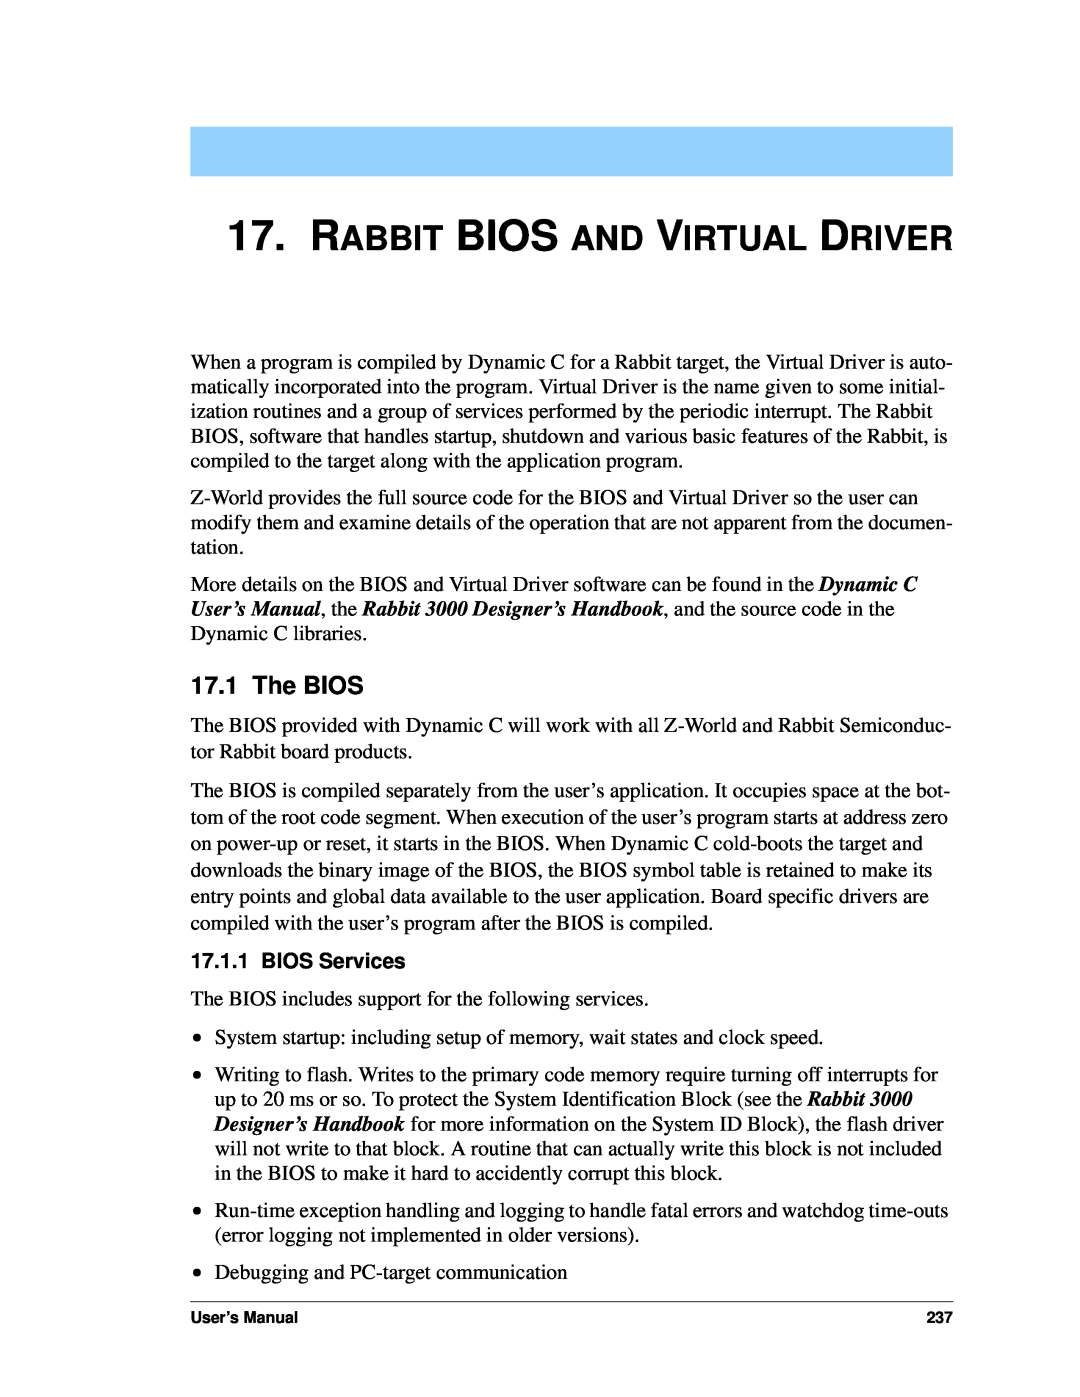 Jameco Electronics 3000, 2000 manual Rabbit Bios And Virtual Driver, The BIOS, BIOS Services 